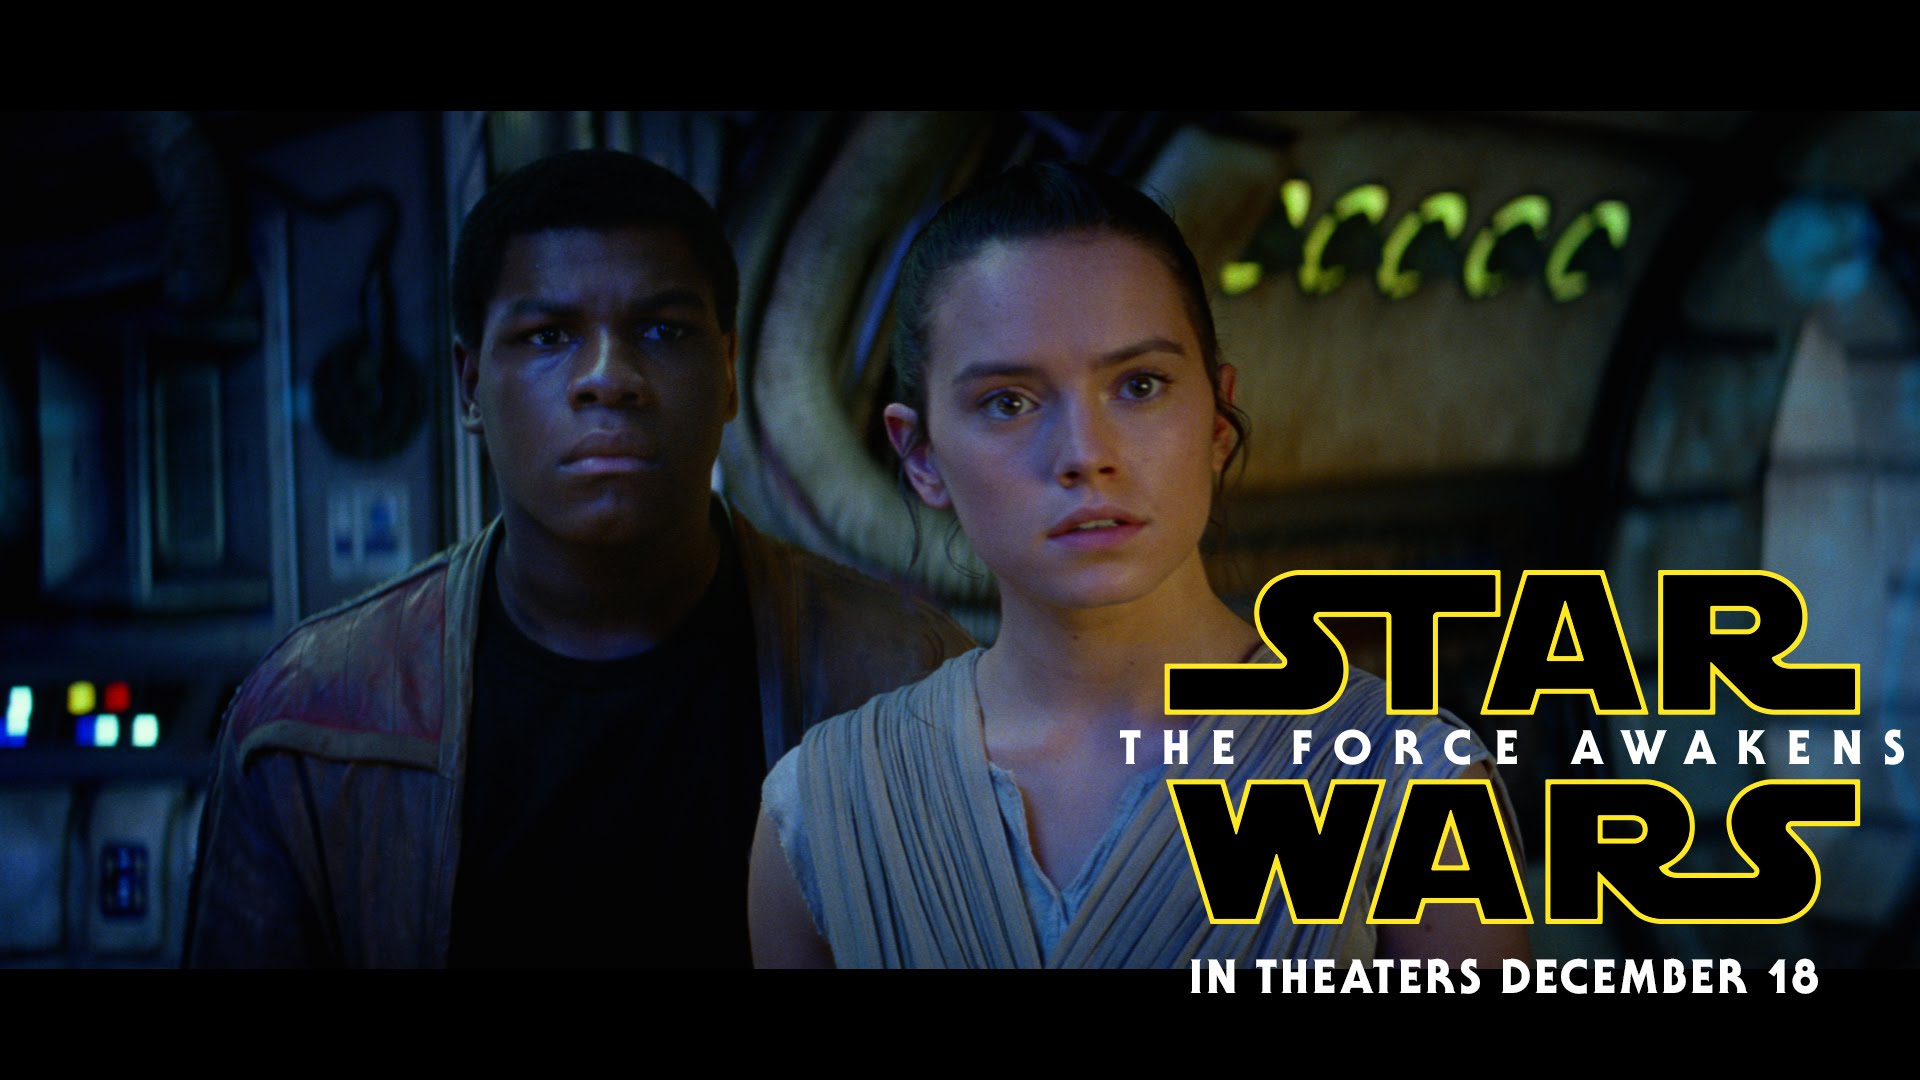 Star Wars Episode VII: The Force Awakens #14